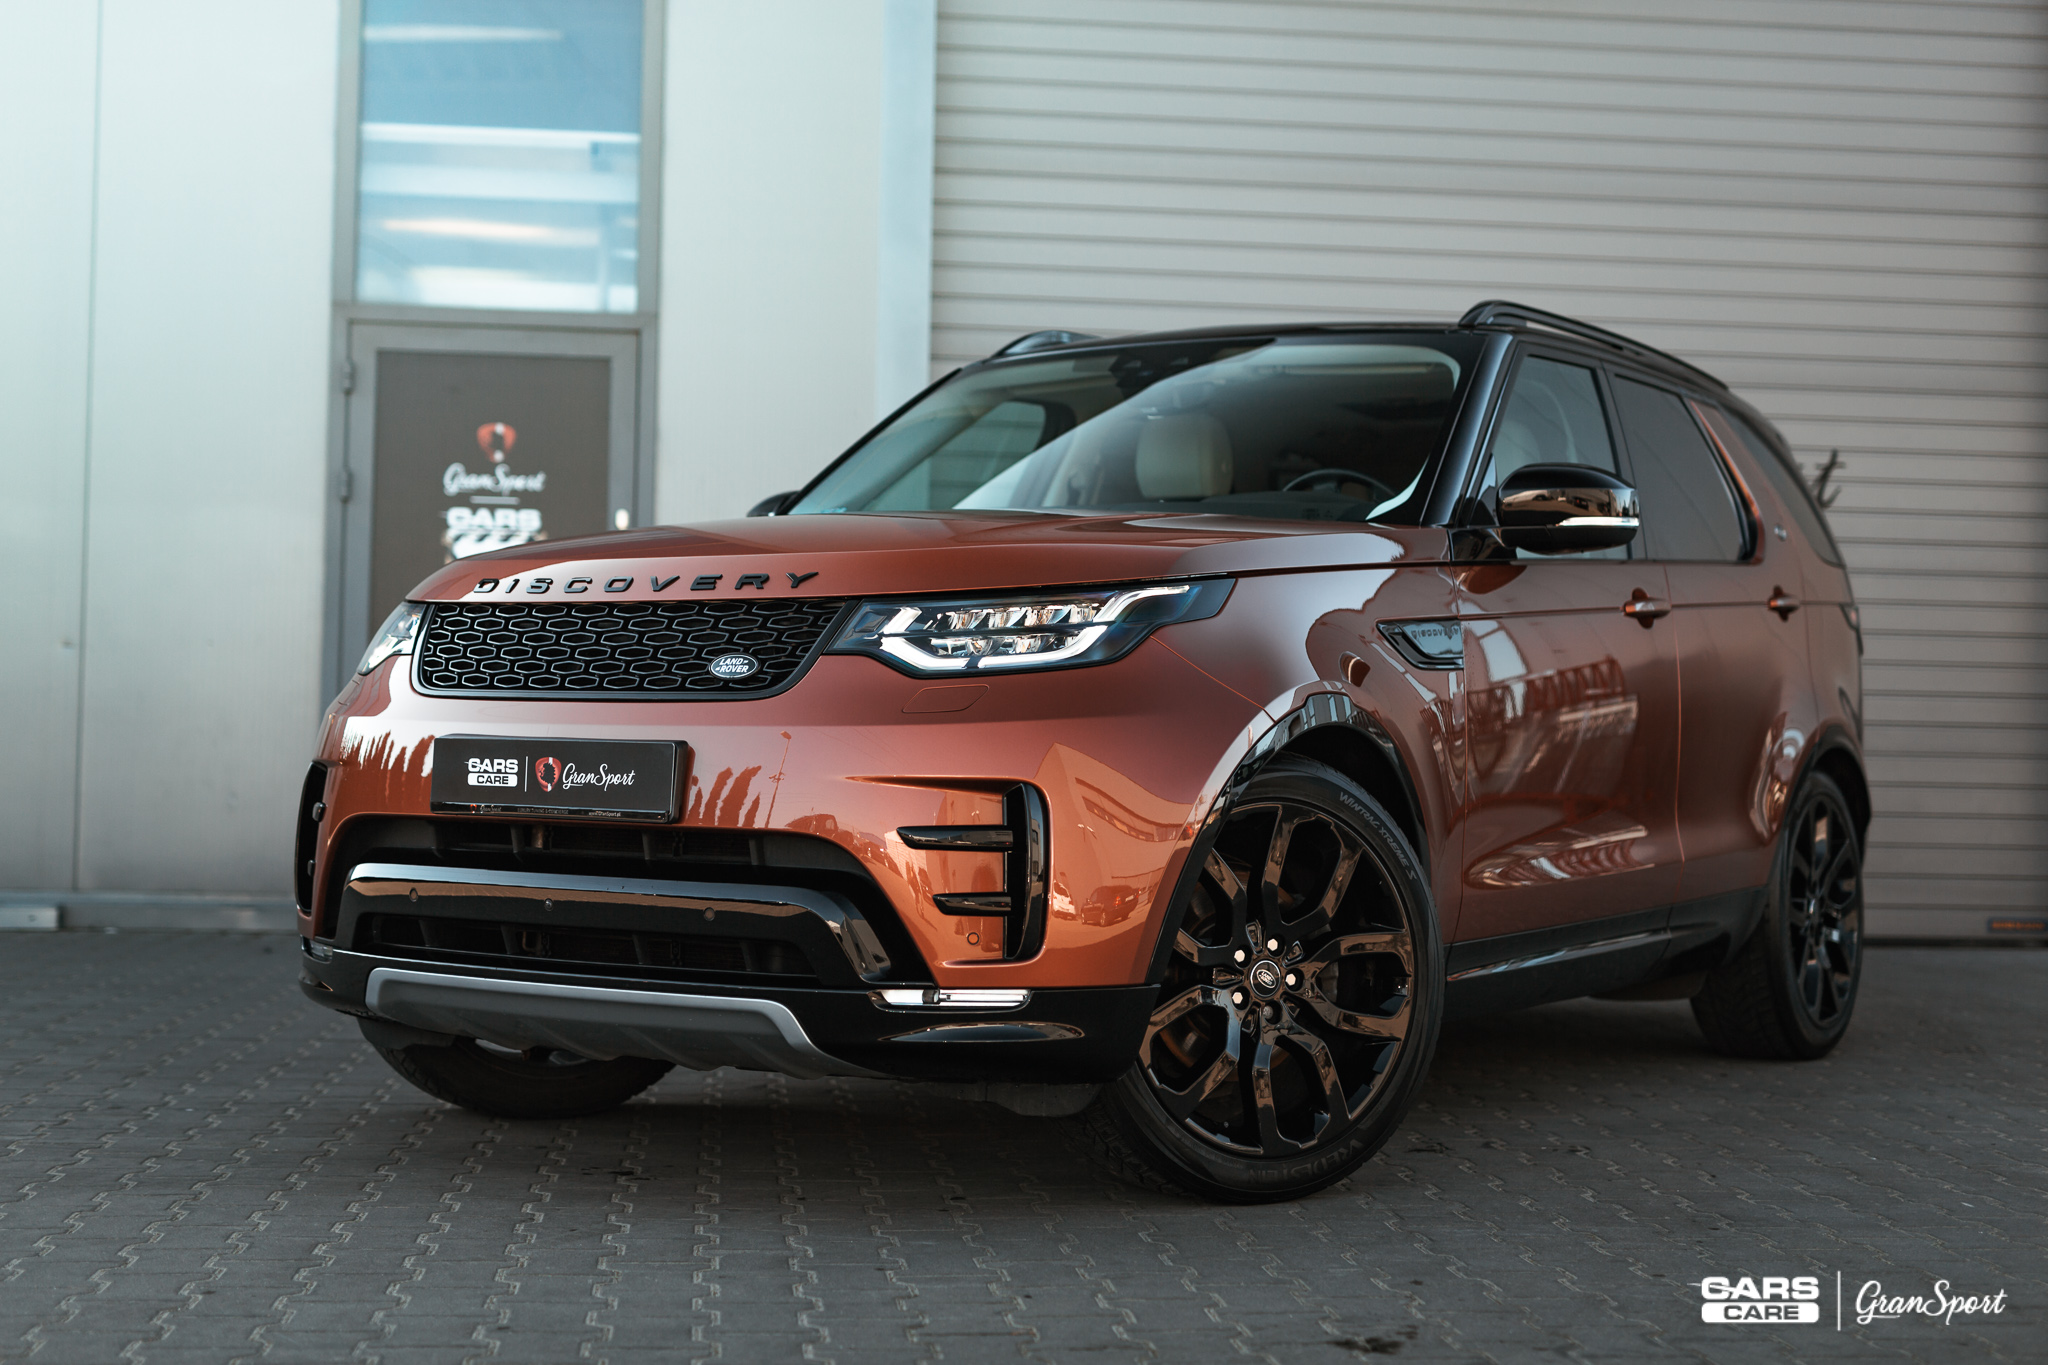 Land Rover Discovery - Powłoka ceramiczna - carscare.pl